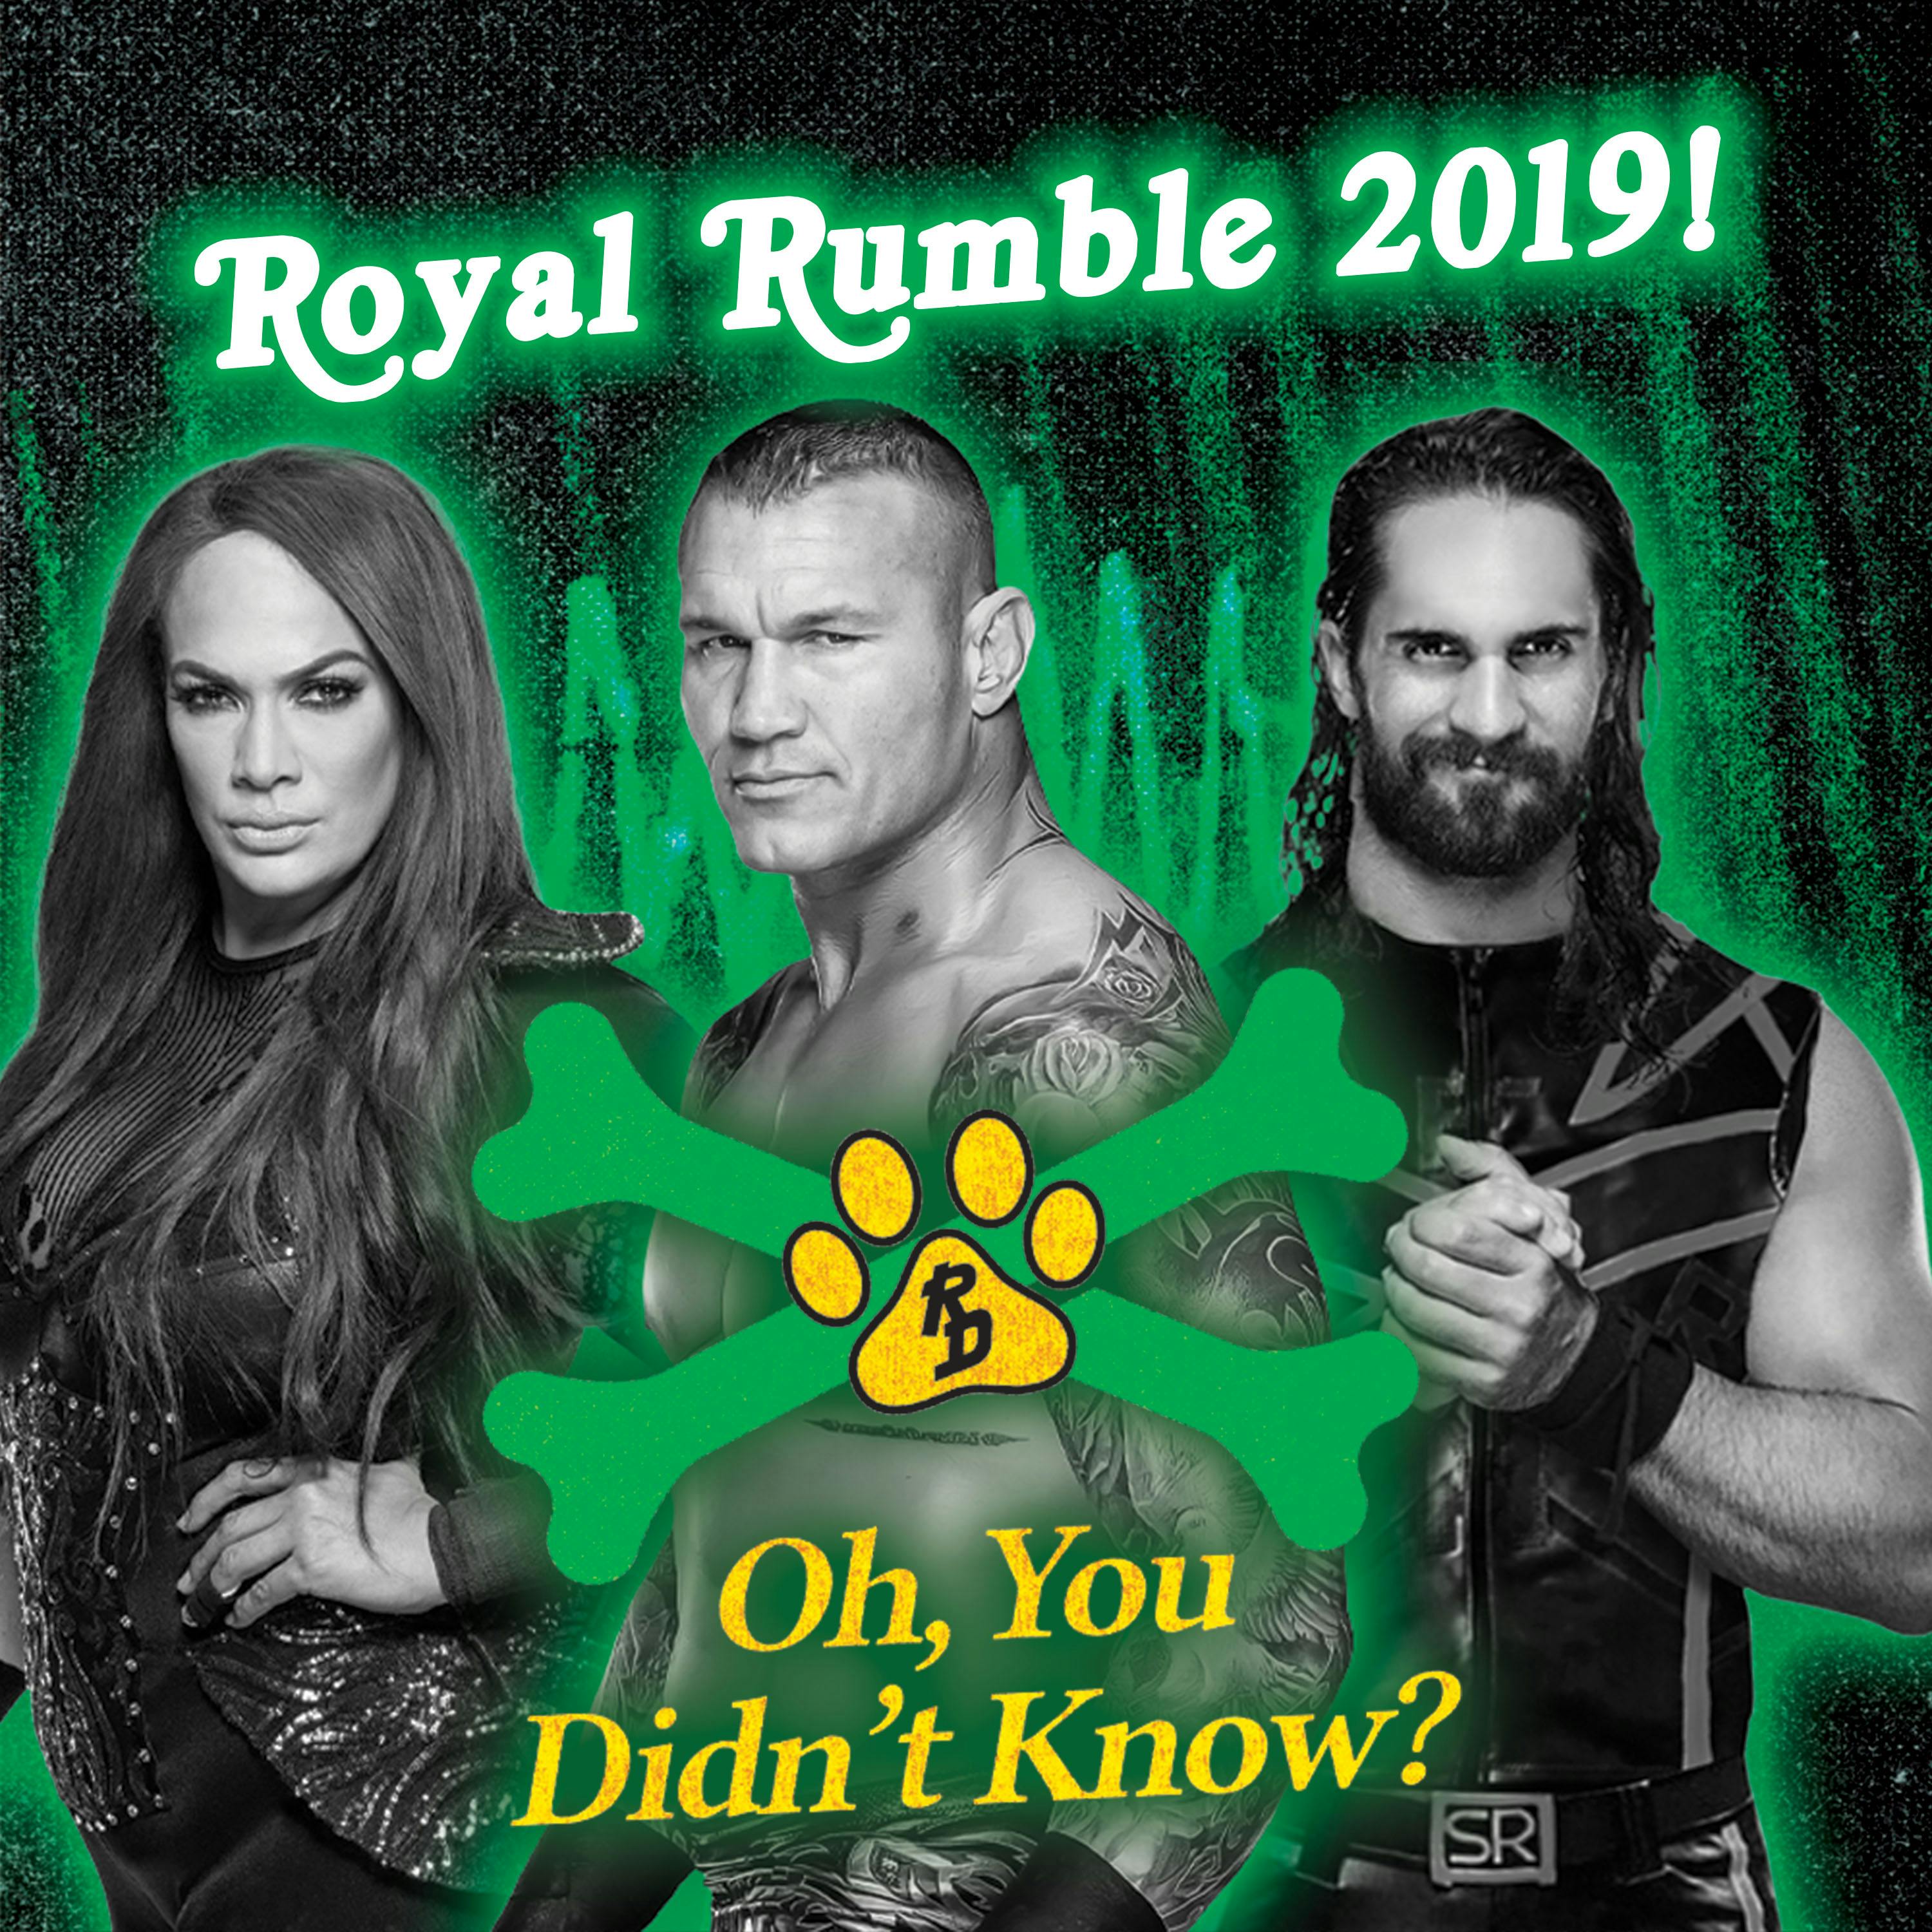 Royal Rumble 2019!